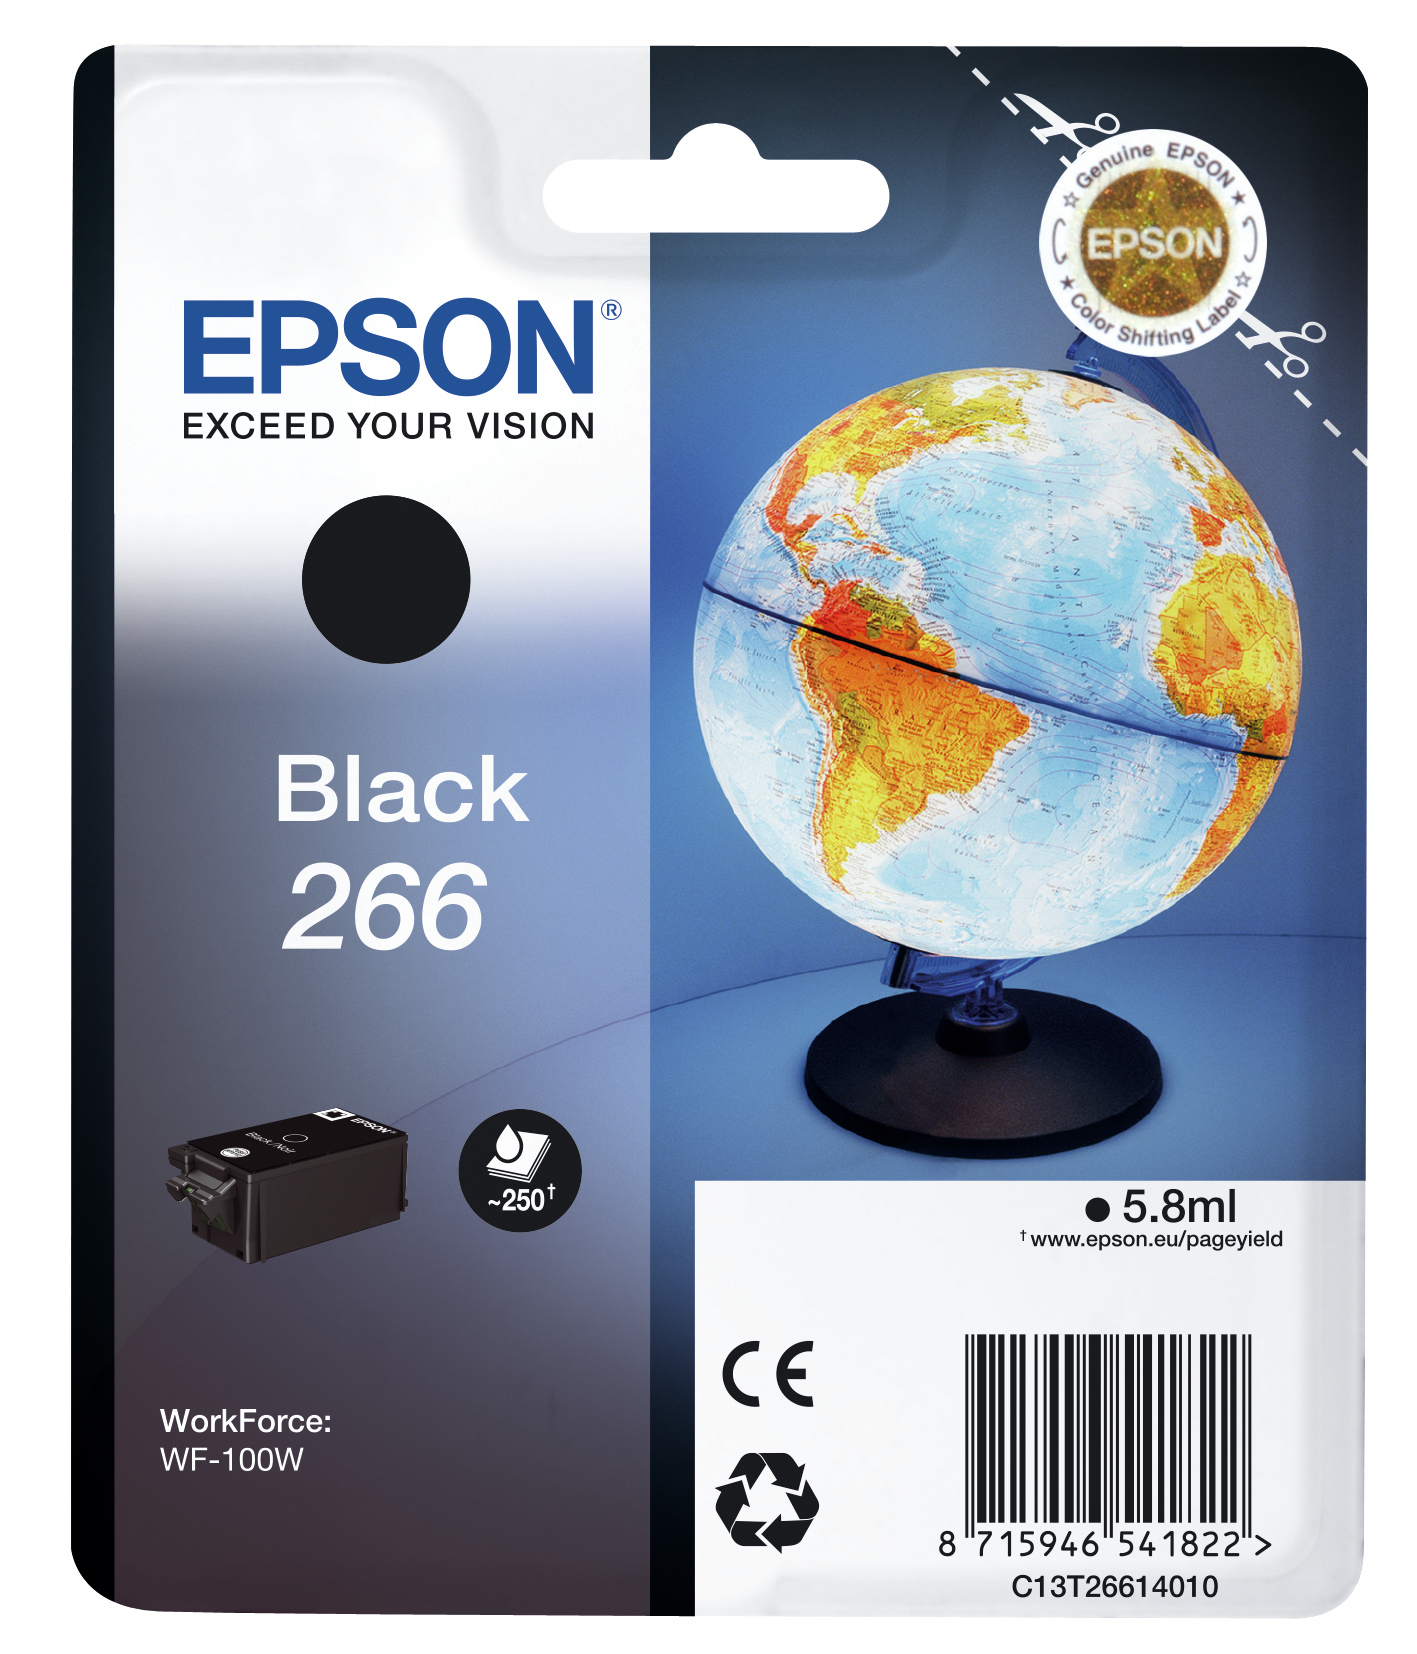 Singlepack Black 266 Ink Cartr Epson Consumer Ink S1 C13t26614010 8715946541822